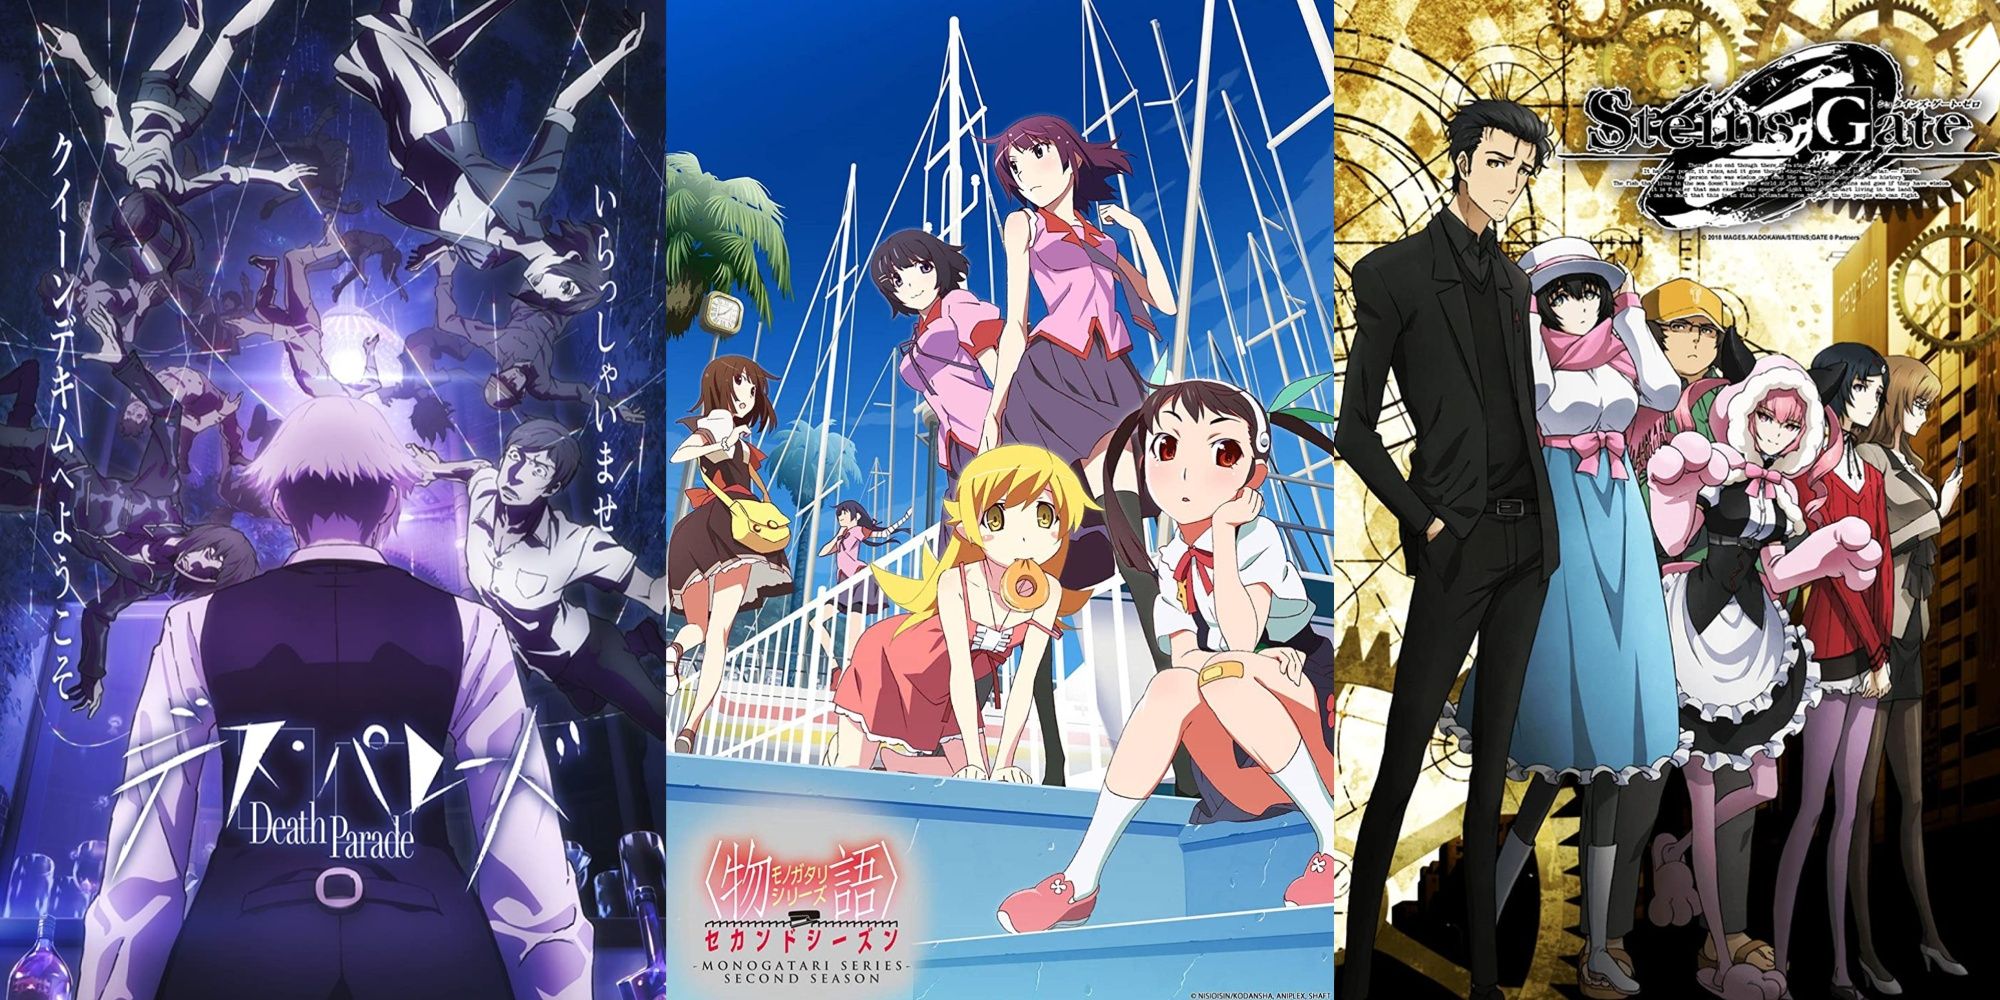 Monogatari Series: Second Season (Hitagi and Hanekawa) - Monogatari (Series)  Wallpaper (39837652) - Fanpop